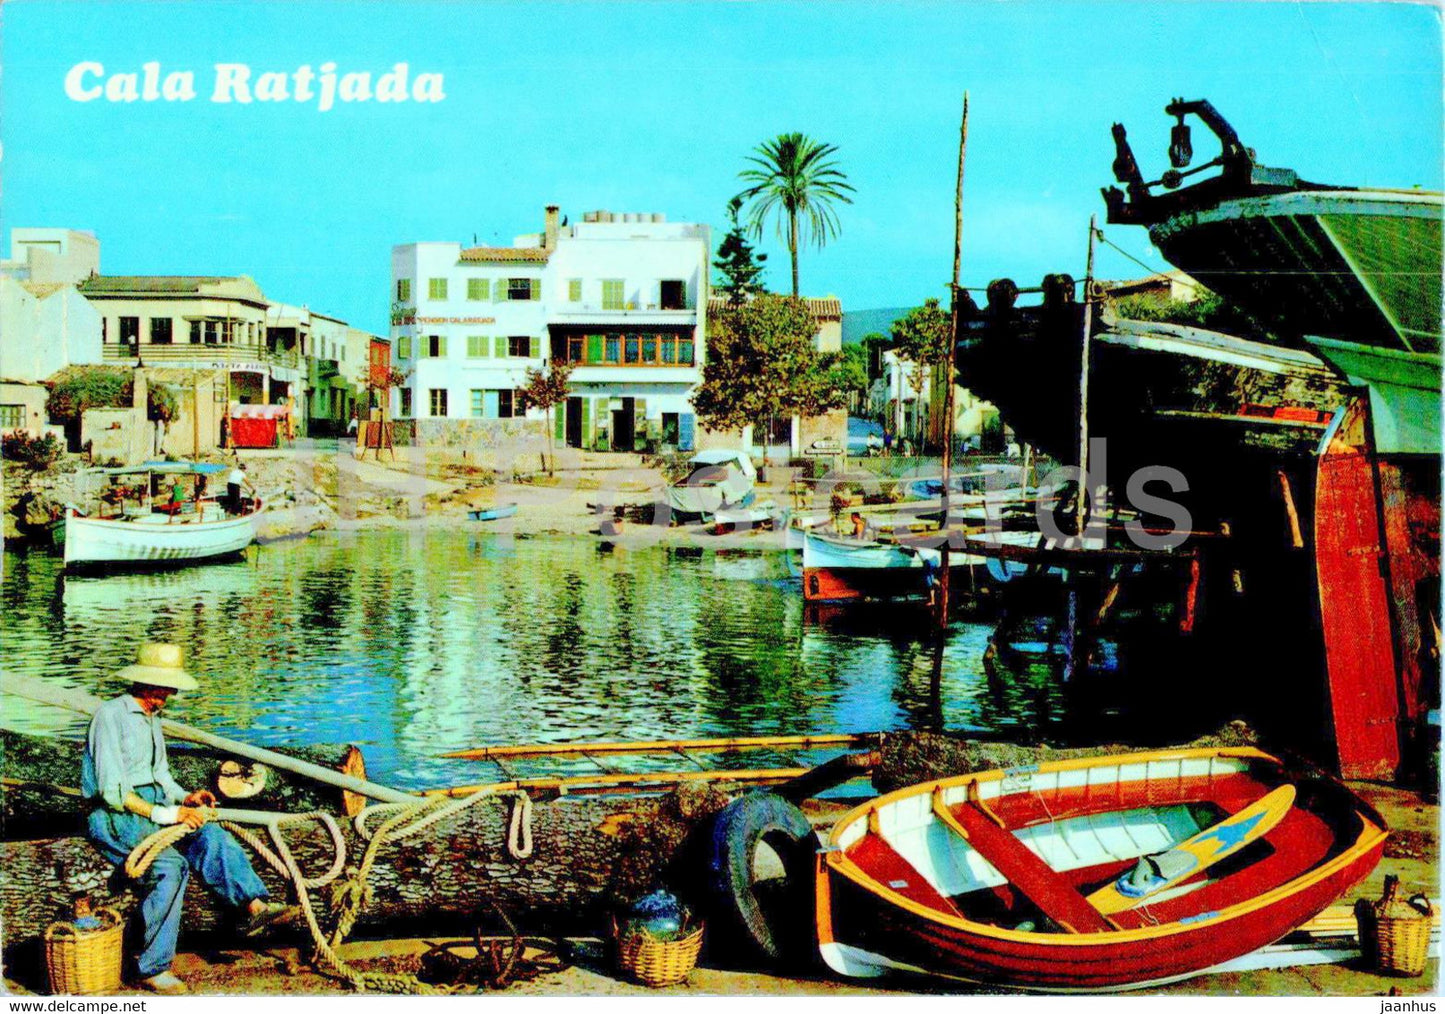 Cala Ratjada - Vista parcial de su puerto - Mallorca - boat - port - 2118 - Spain - unused - JH Postcards